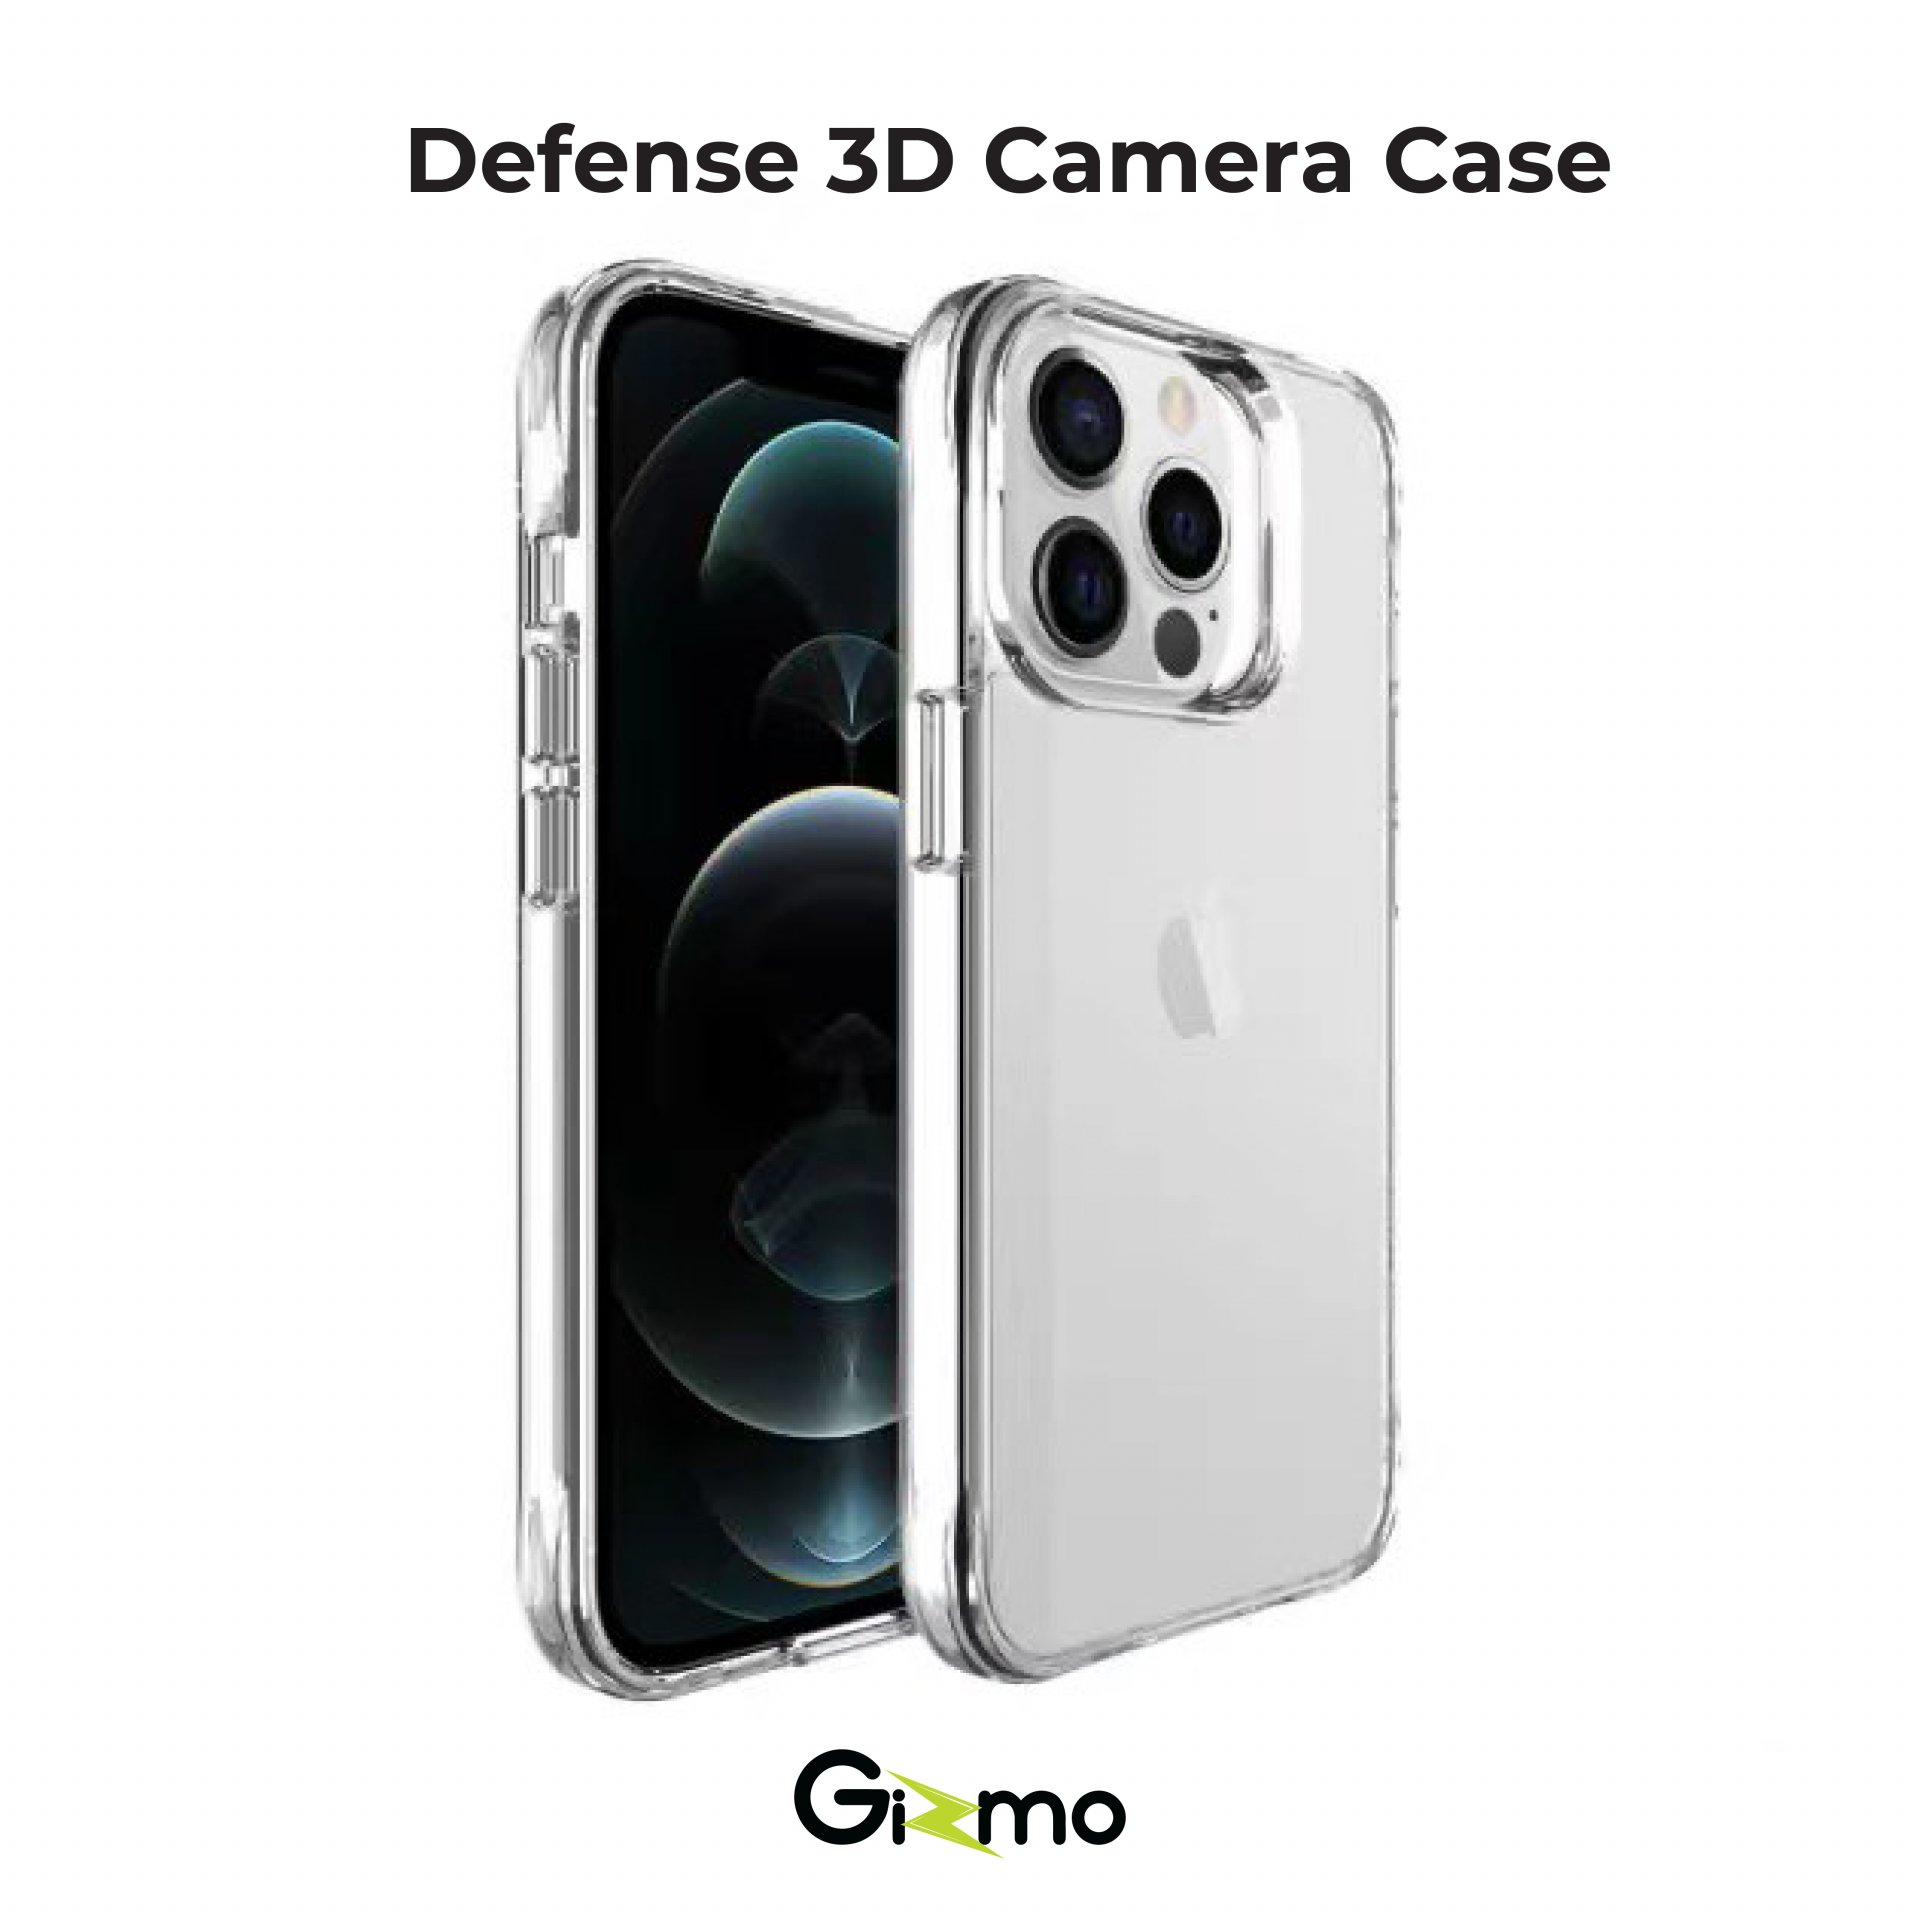 Gizmo เคสไอโฟน เคสiphone 11 iphone 12 เคสใสกันกระแทก รุ่น 3D defense camera